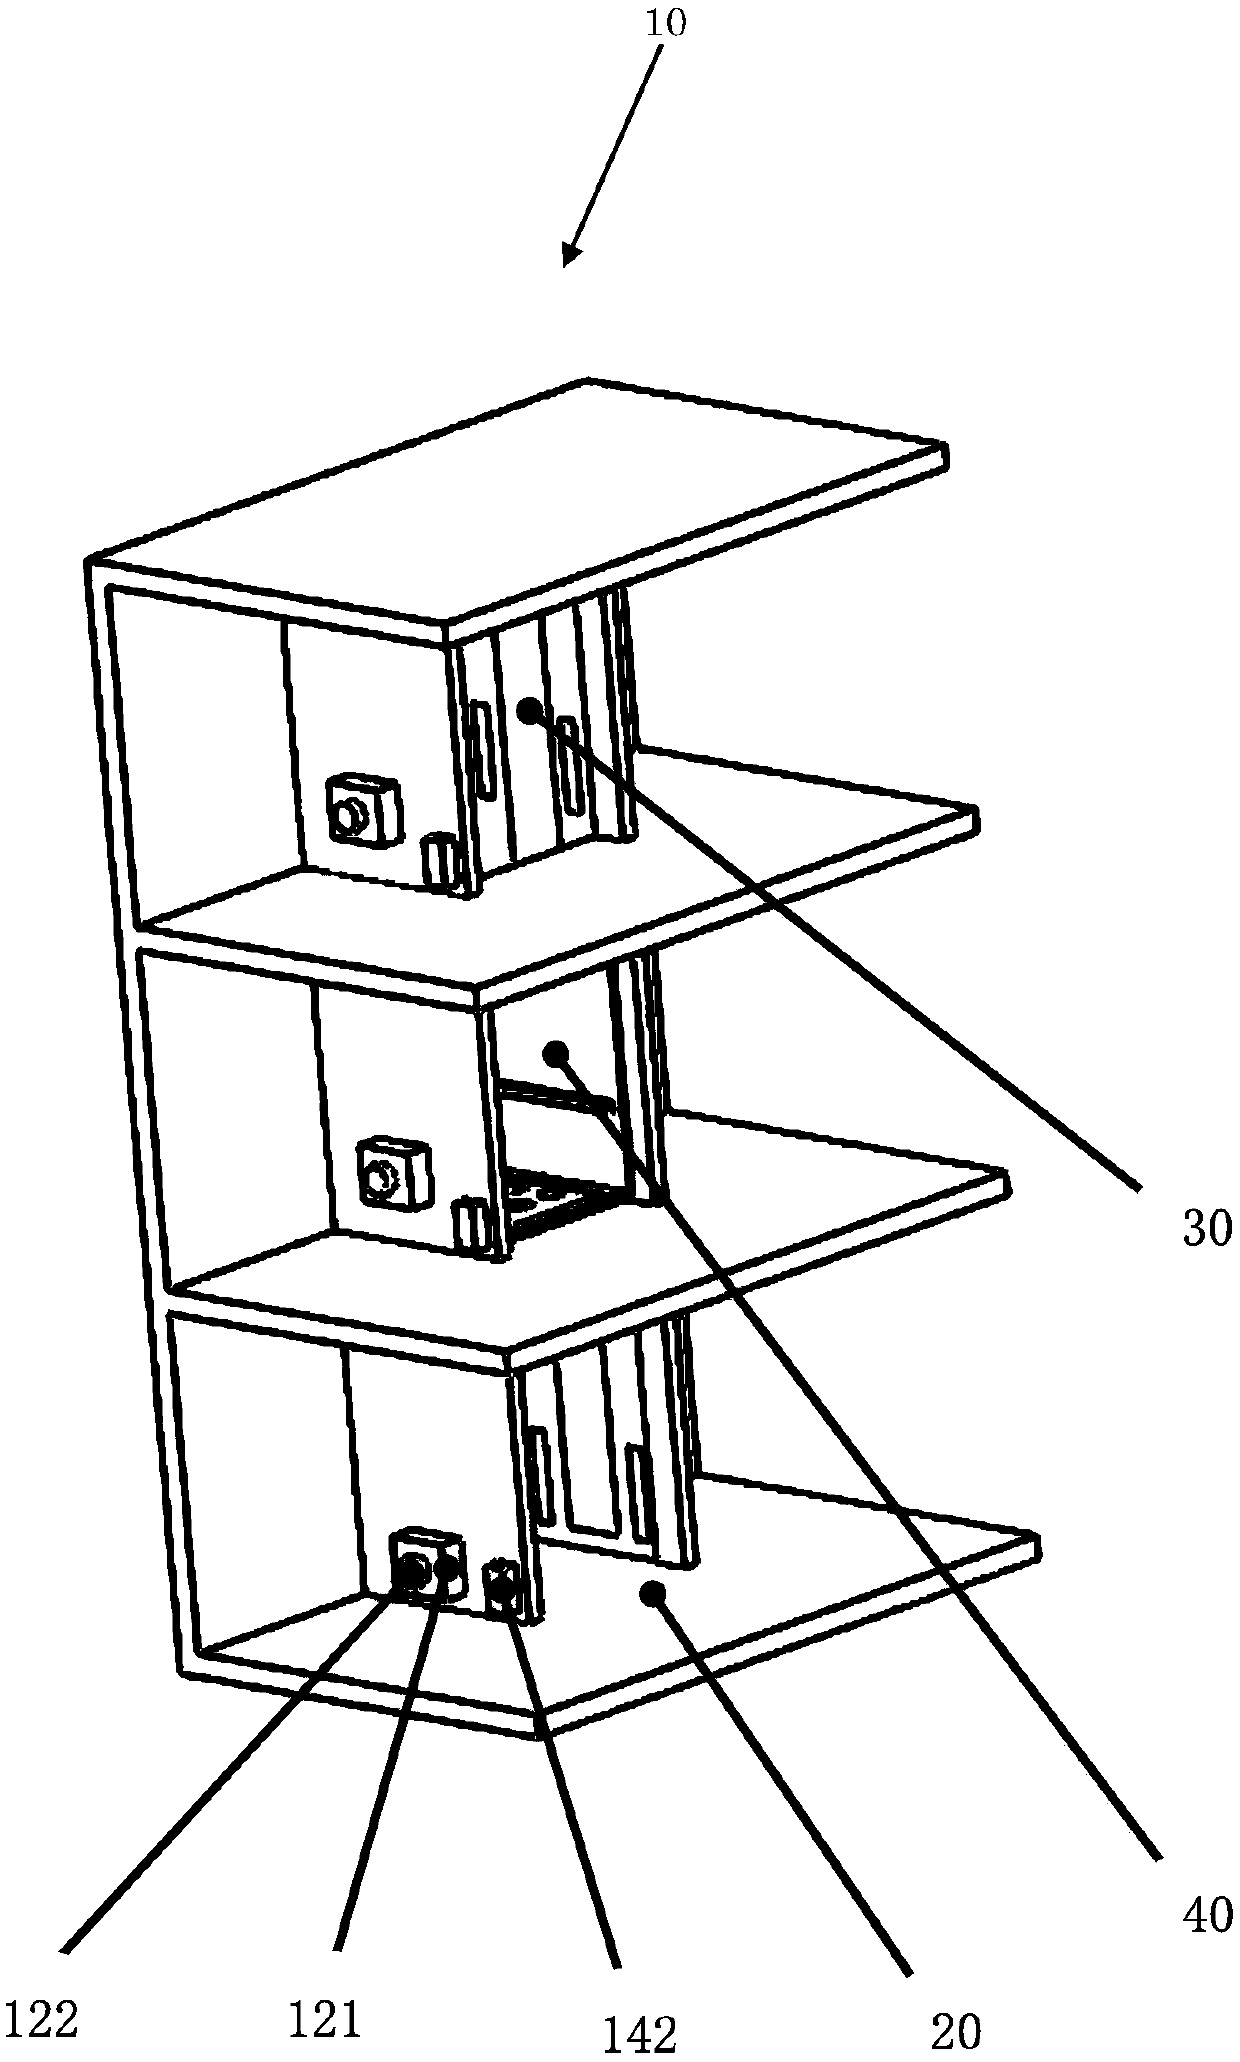 Vertical lifting elevator safety system